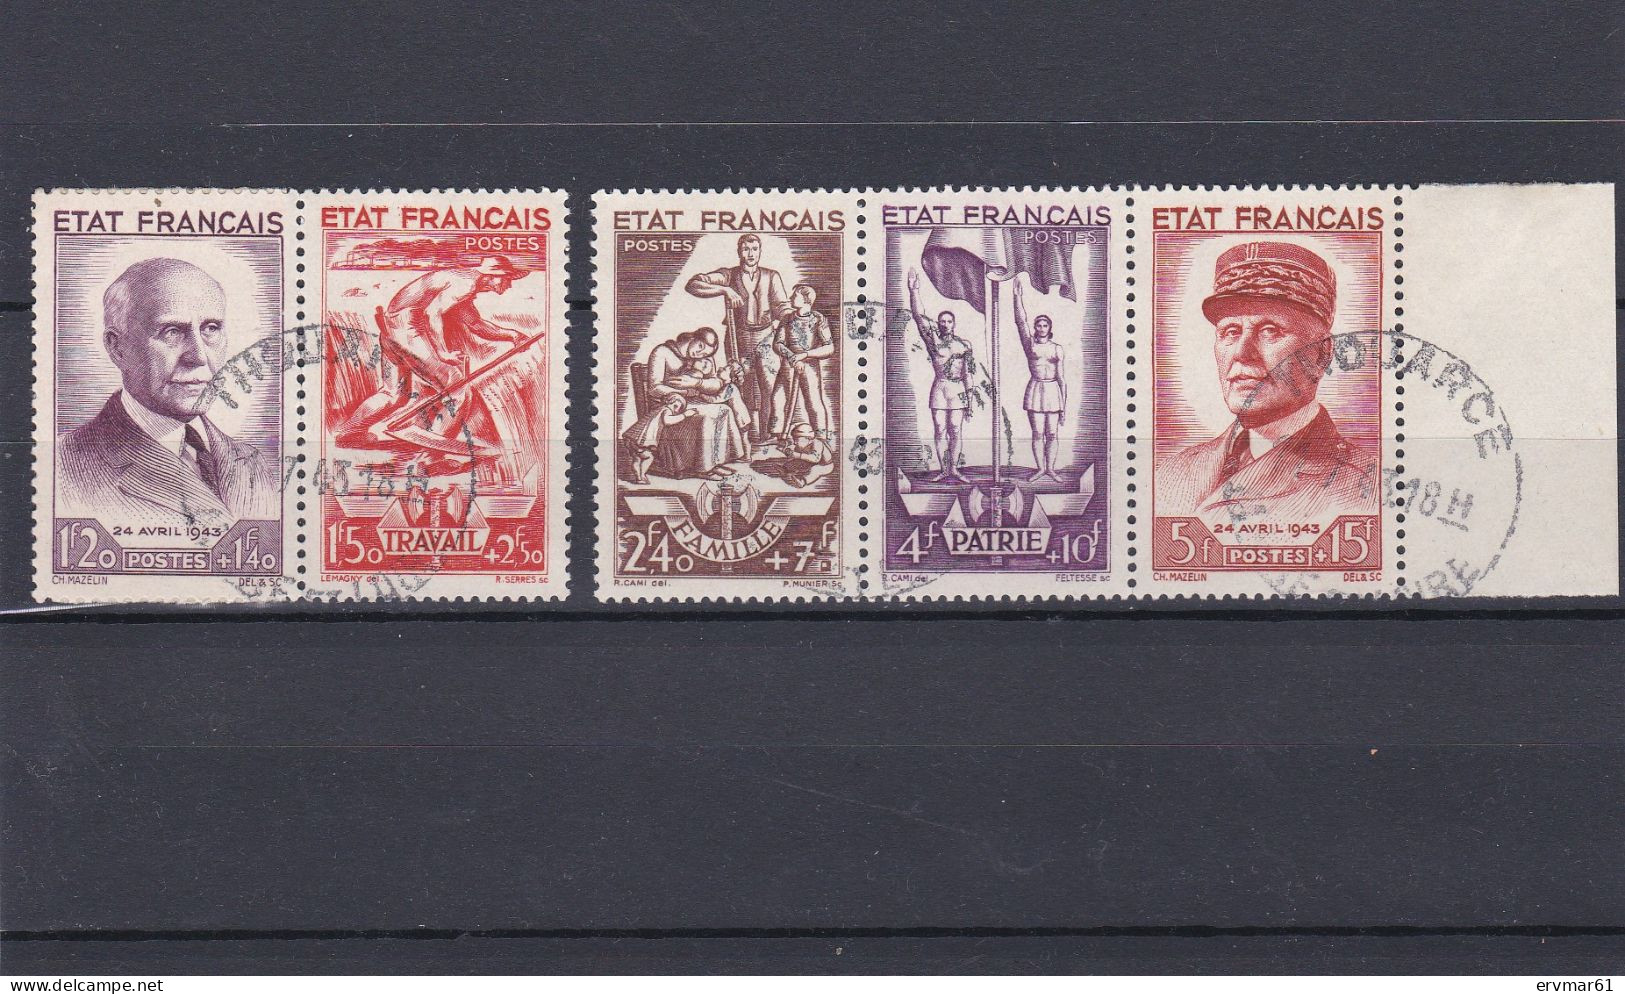 TIMBRES DE FRANCE OBLITERES -  N° 576 à 580 Cote 65.00 € - Used Stamps